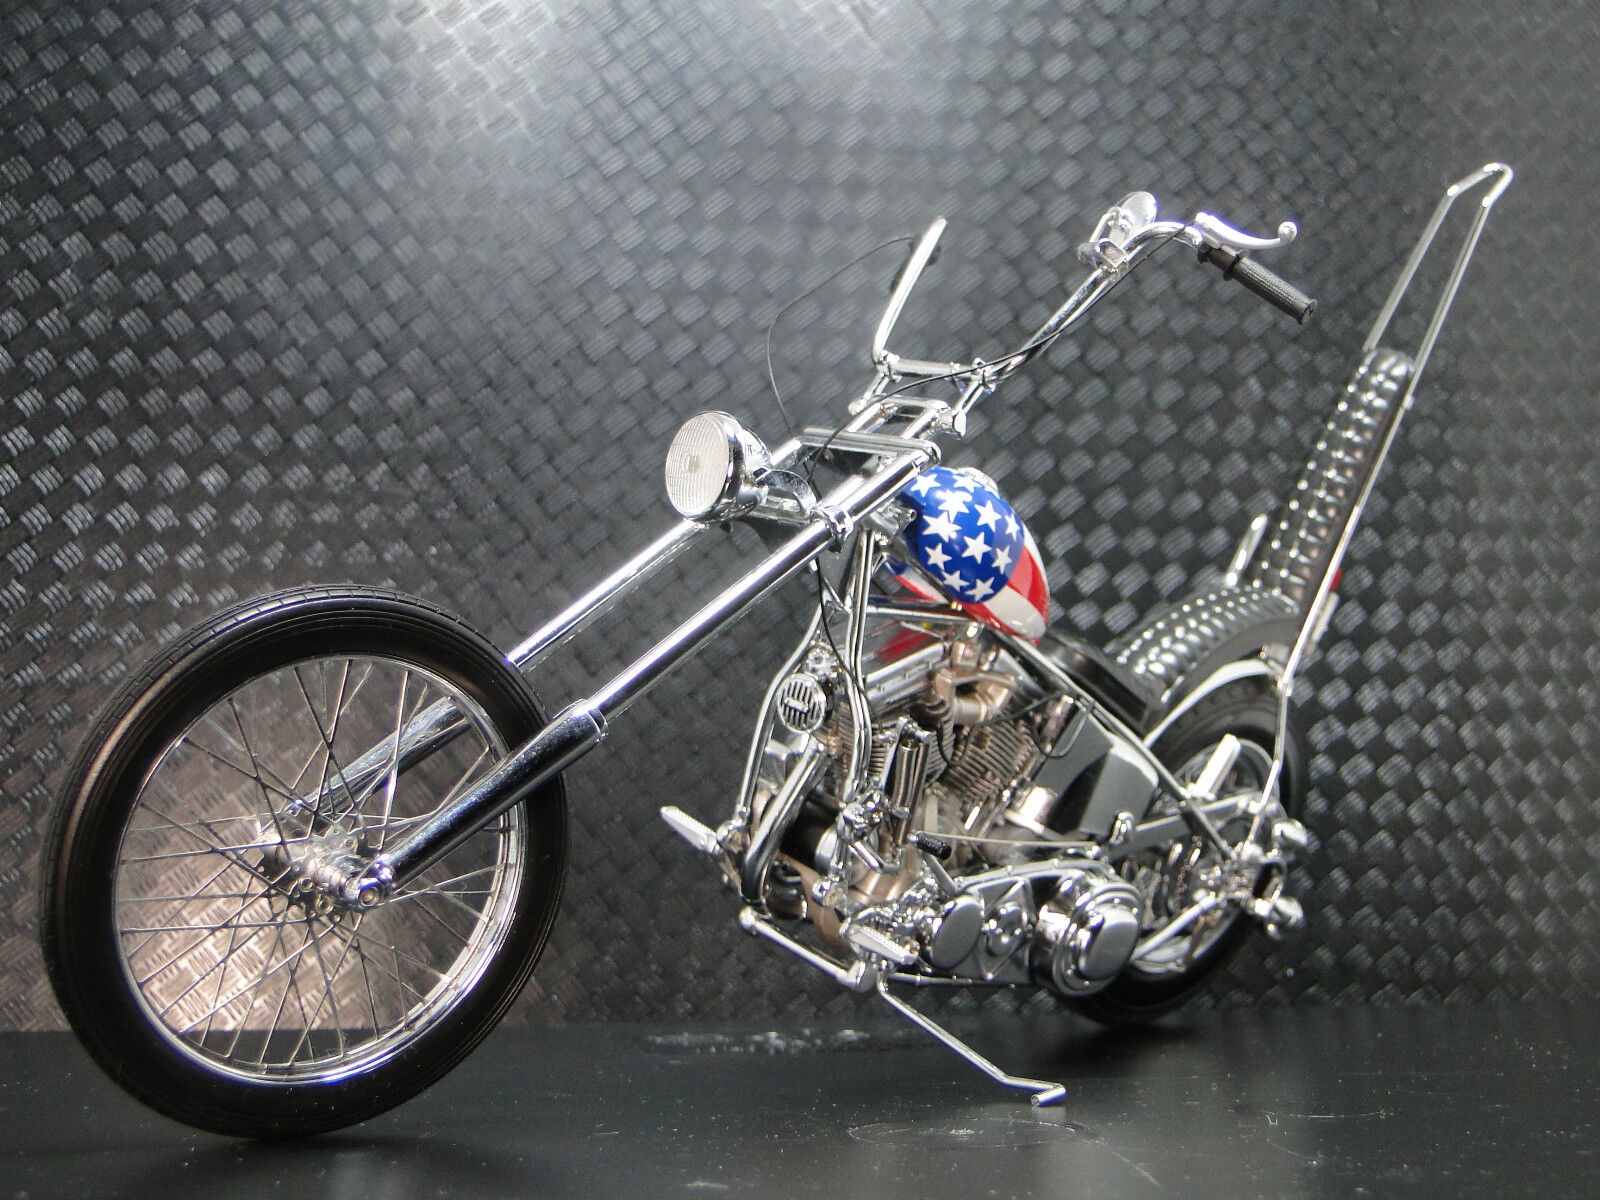 Harley Davidson Motorcycle 1969 Easy Rider Movie Captain America Chopper Model 1